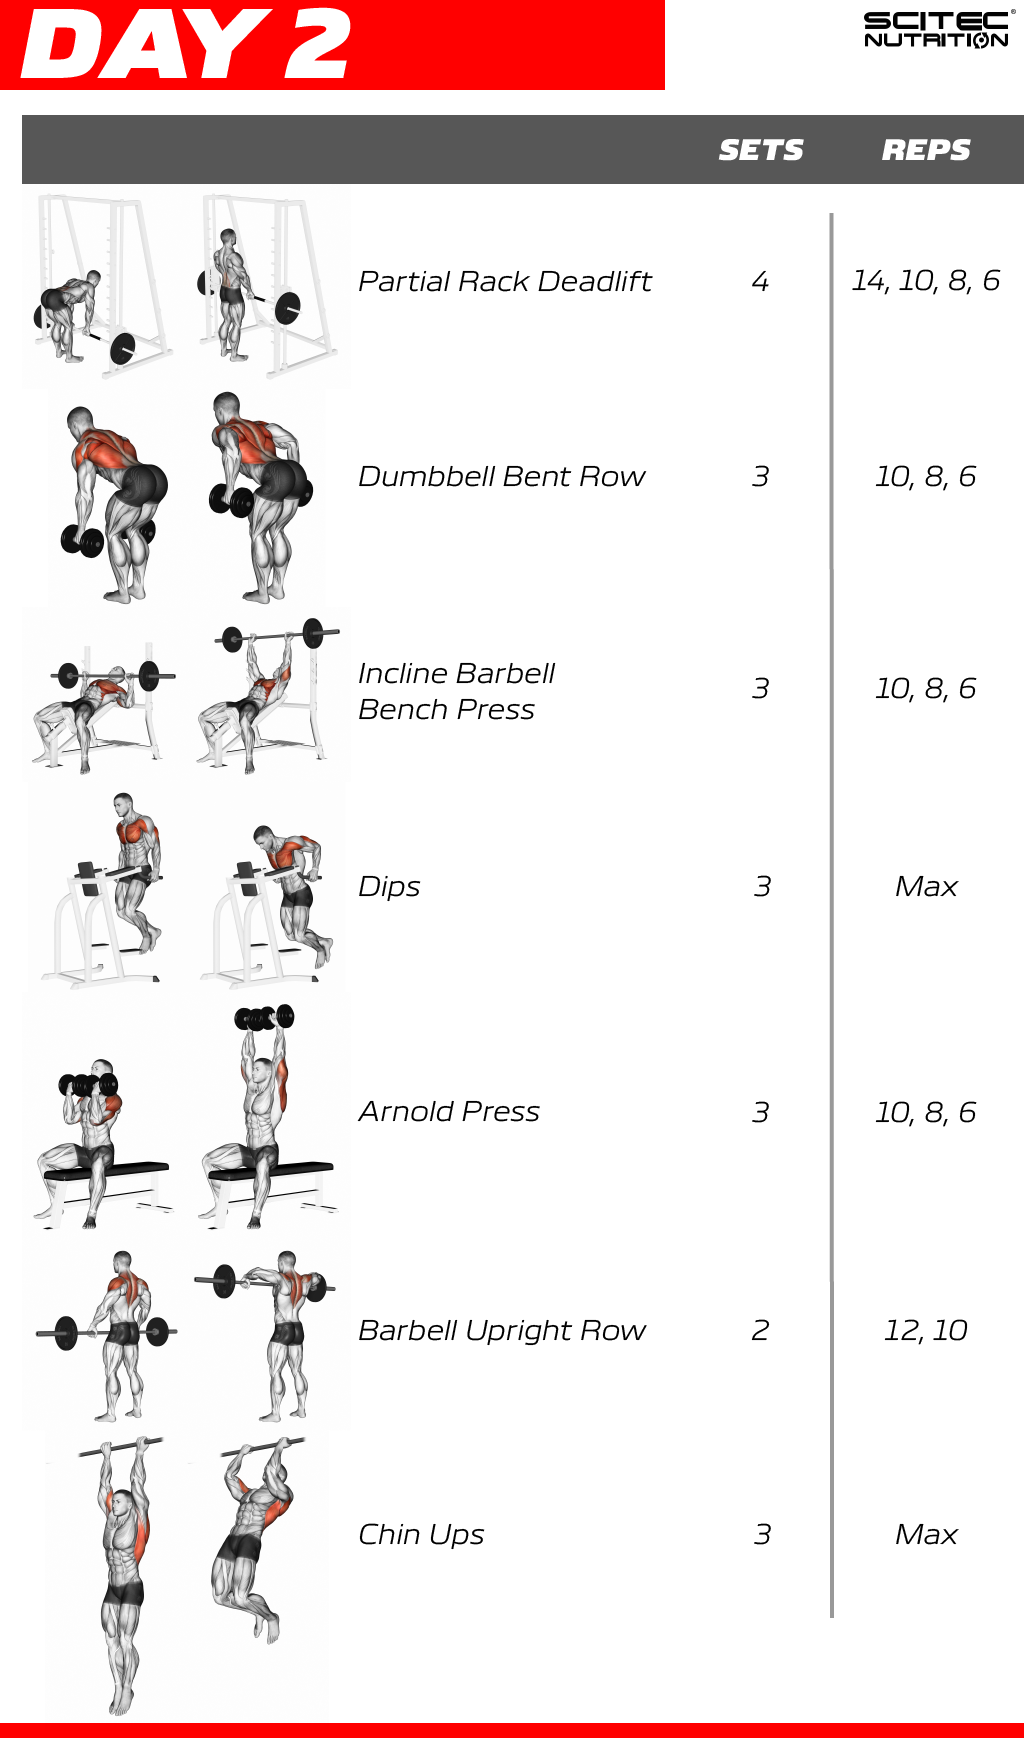 Full Upper Body Workout Program - WorkoutWalls